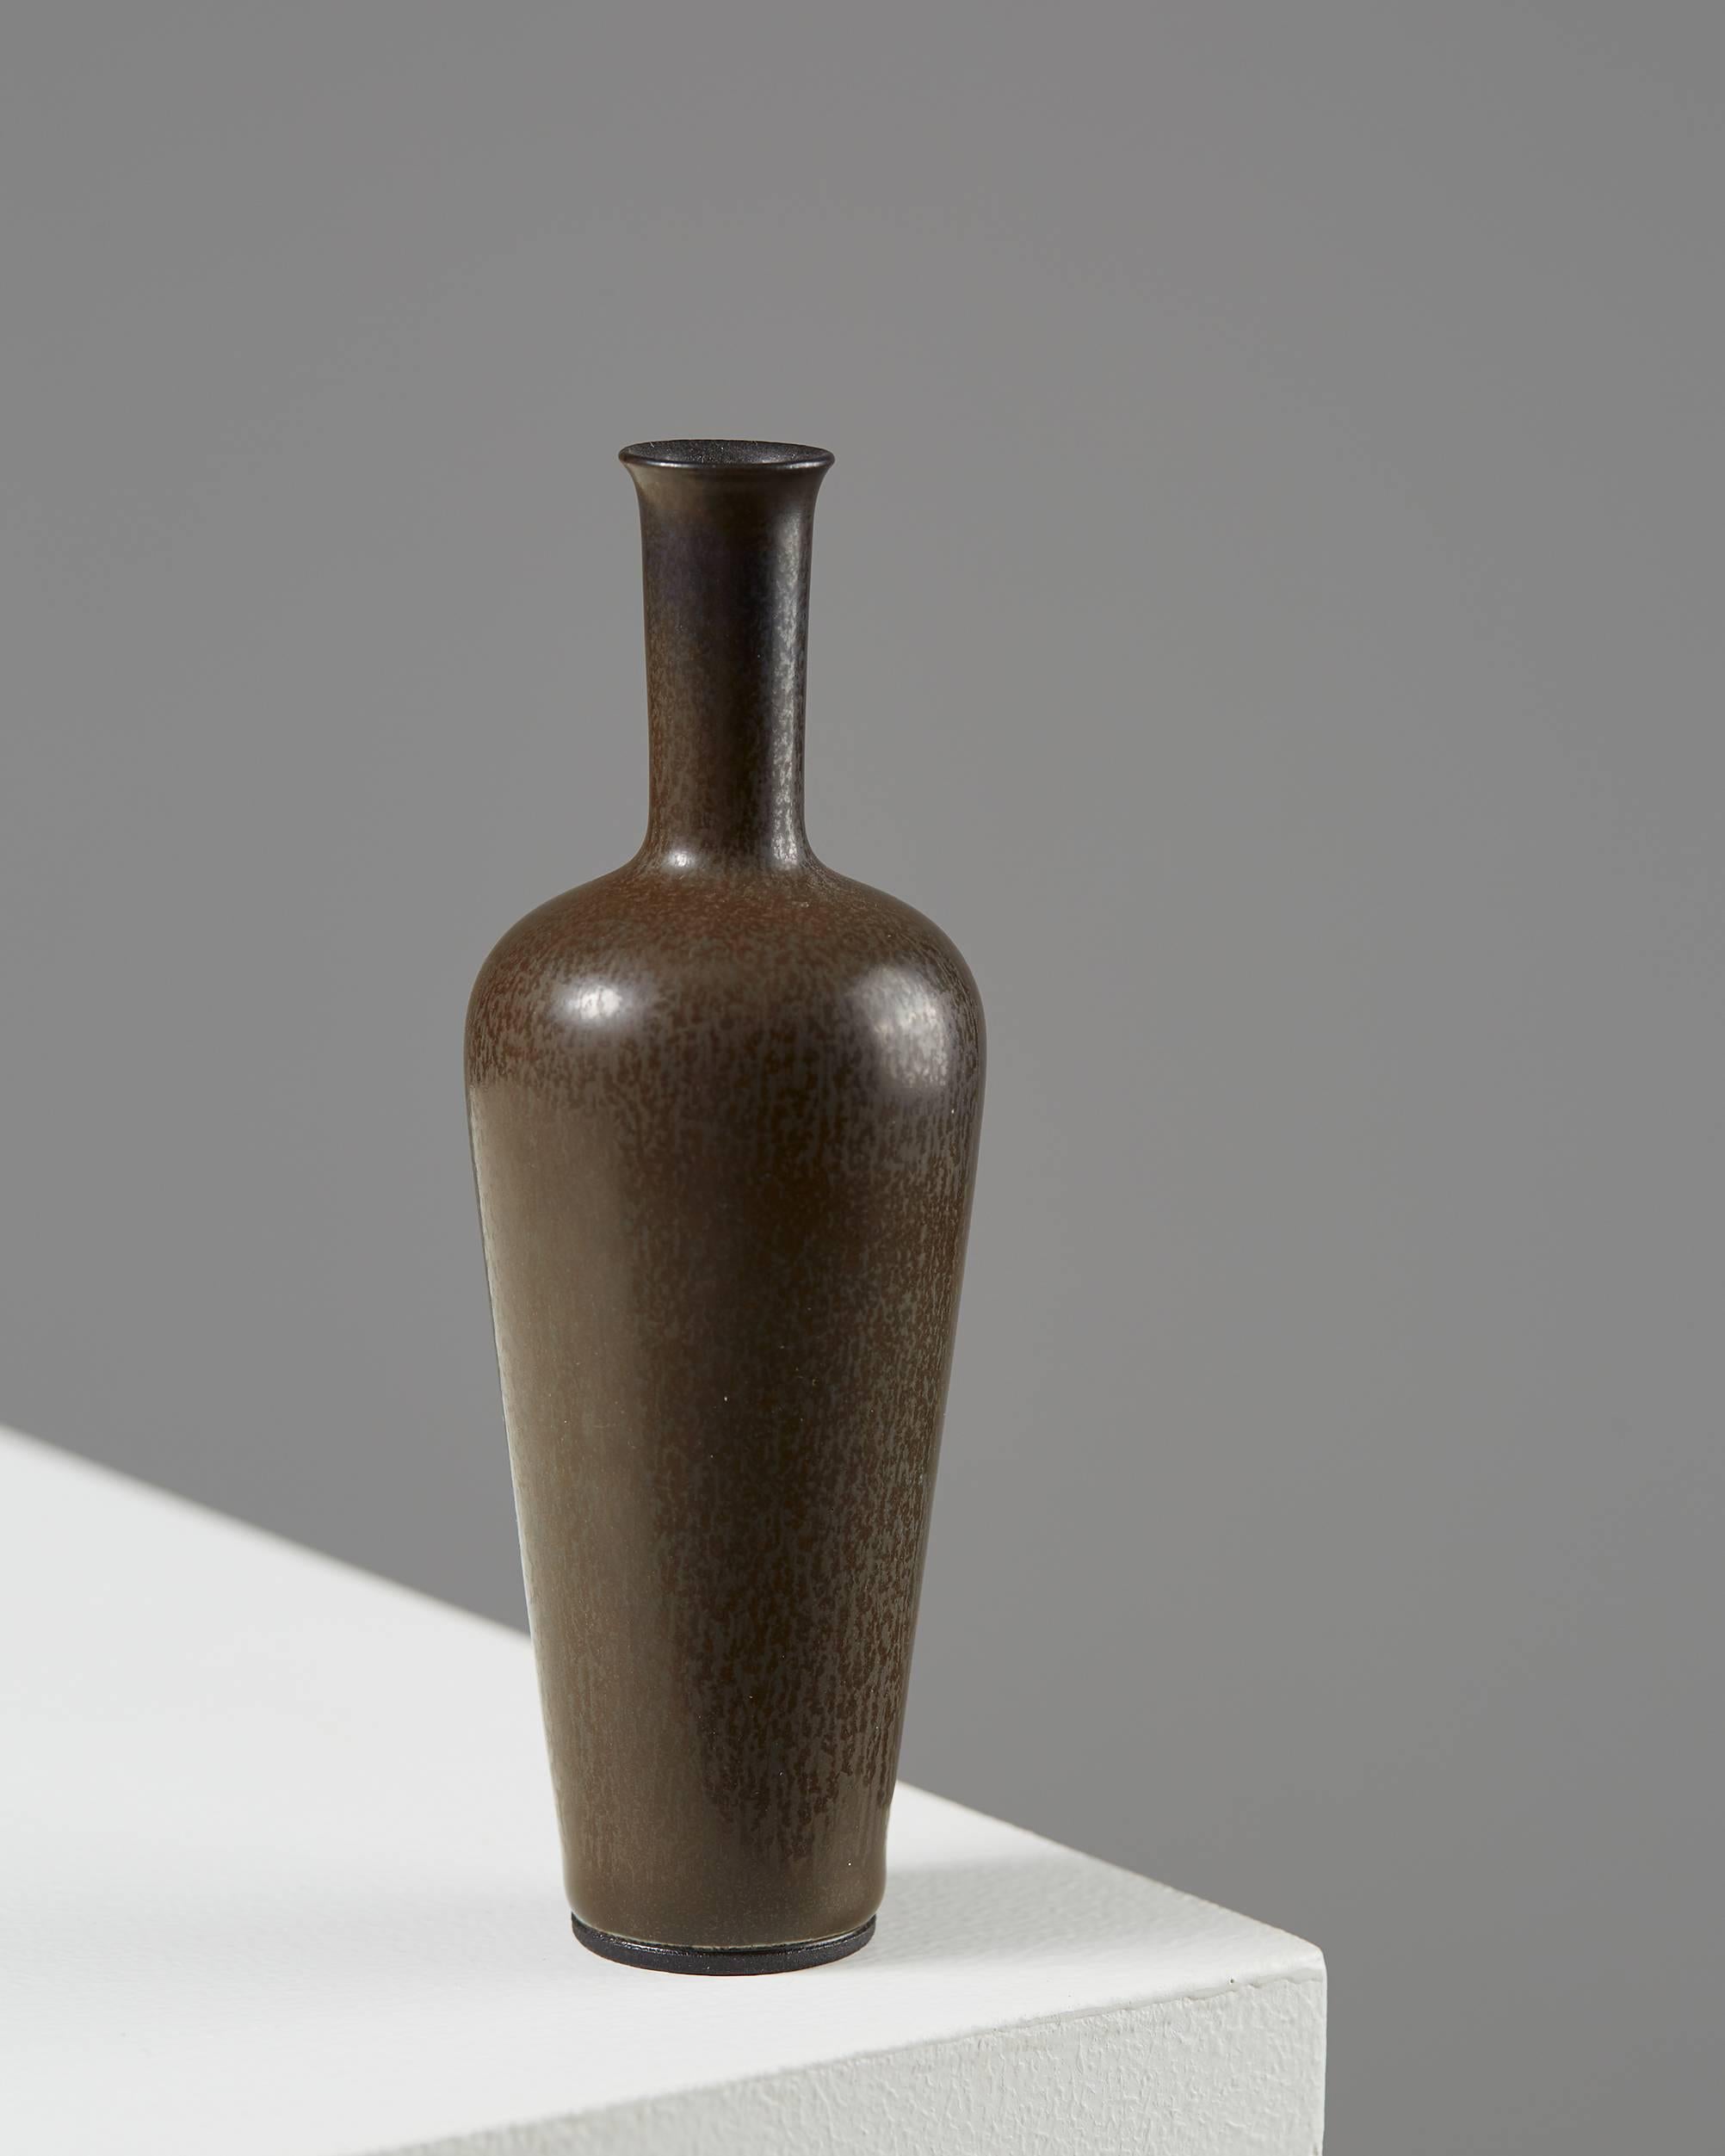 Vase designed by Berndt Friberg for Gustavsberg, 
Sweden, 1950s.
Stoneware.

Measure: H 13.5 cm/ 5 3/8